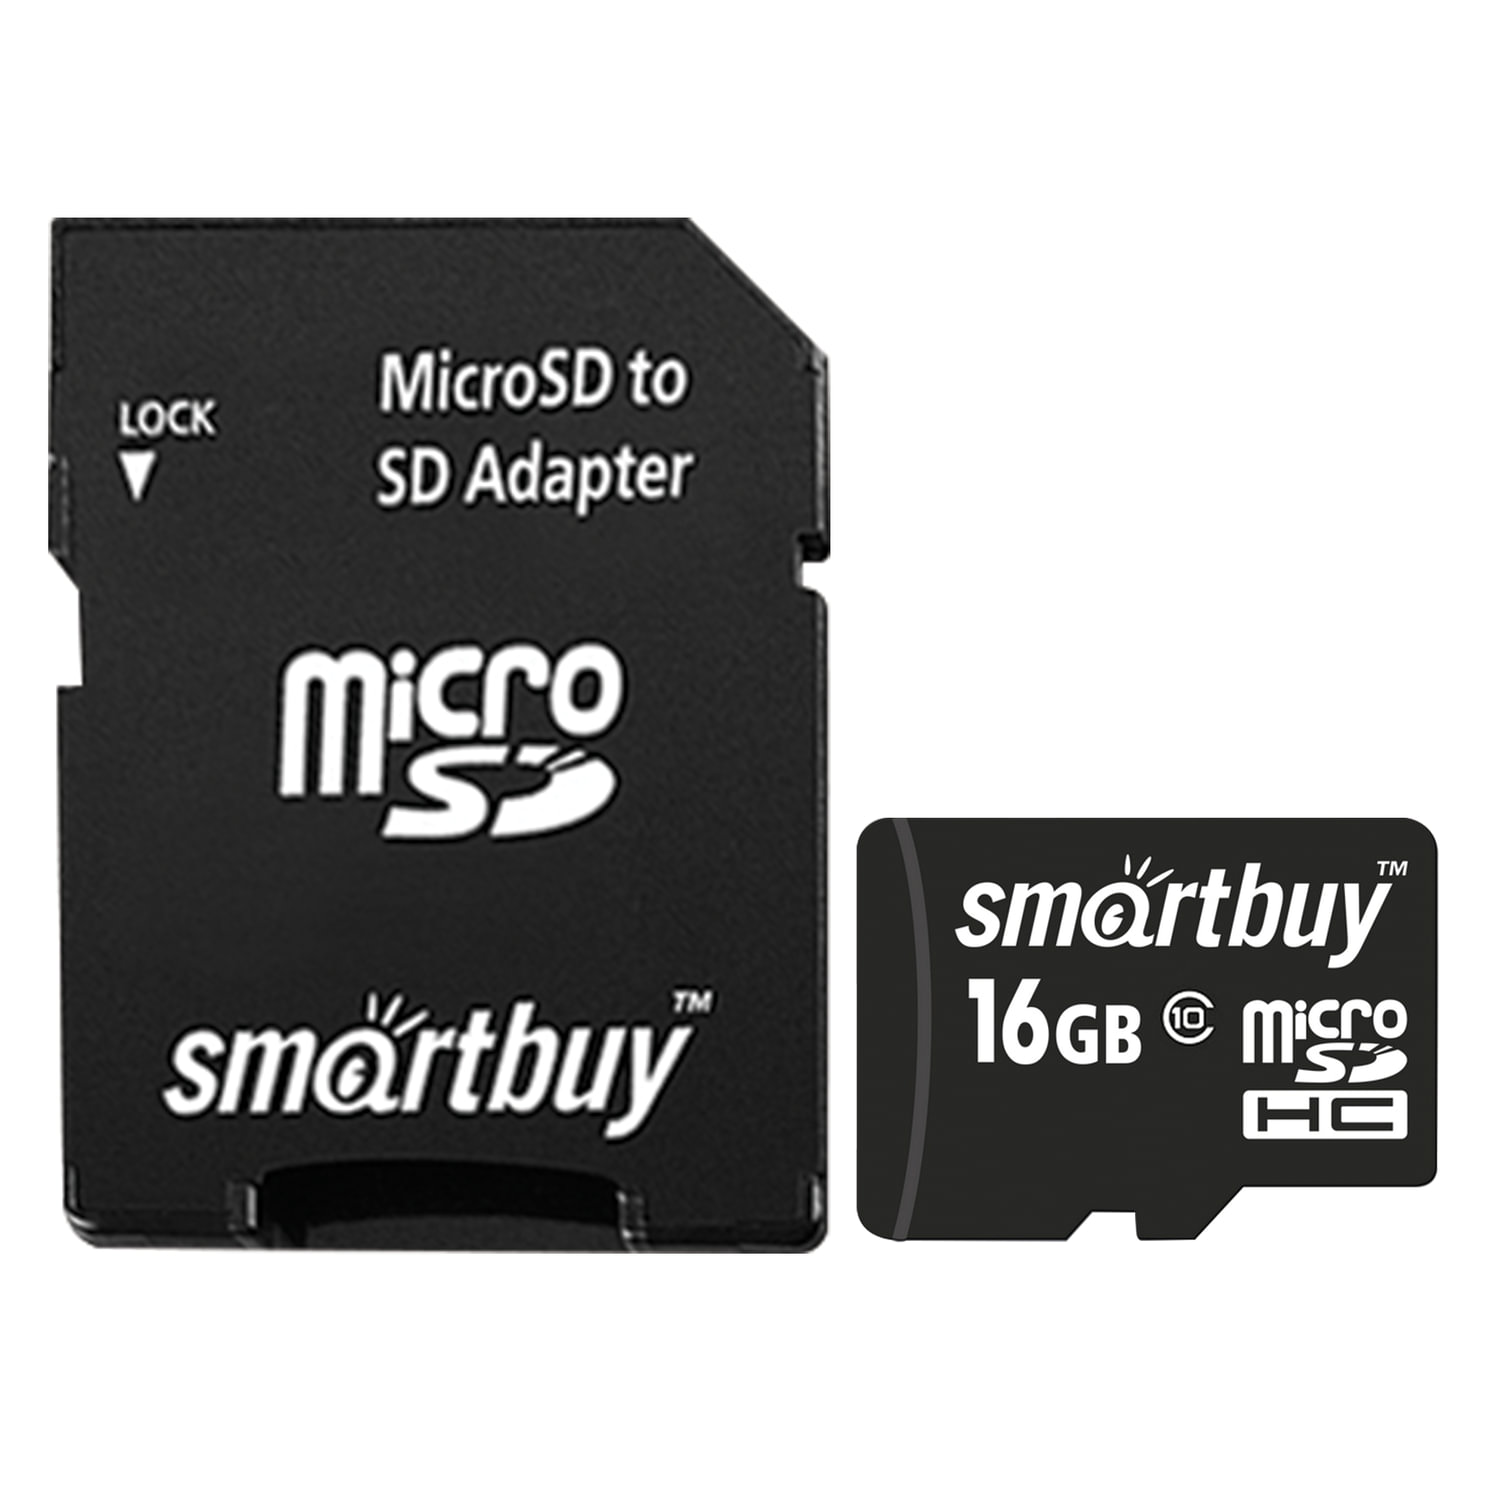 Сд 64 гб купить. SMARTBUY 32gb MICROSD. Карта памяти SMARTBUY MICROSDHC class 10 8gb + SD Adapter. Карта памяти SMARTBUY MICROSDHC 16gb. Карта памяти Micro SDHC, 32 GB, SMARTBUY, 10 МБ/сек. (Class 10), с адаптером, sb32gbsdcl10-01.